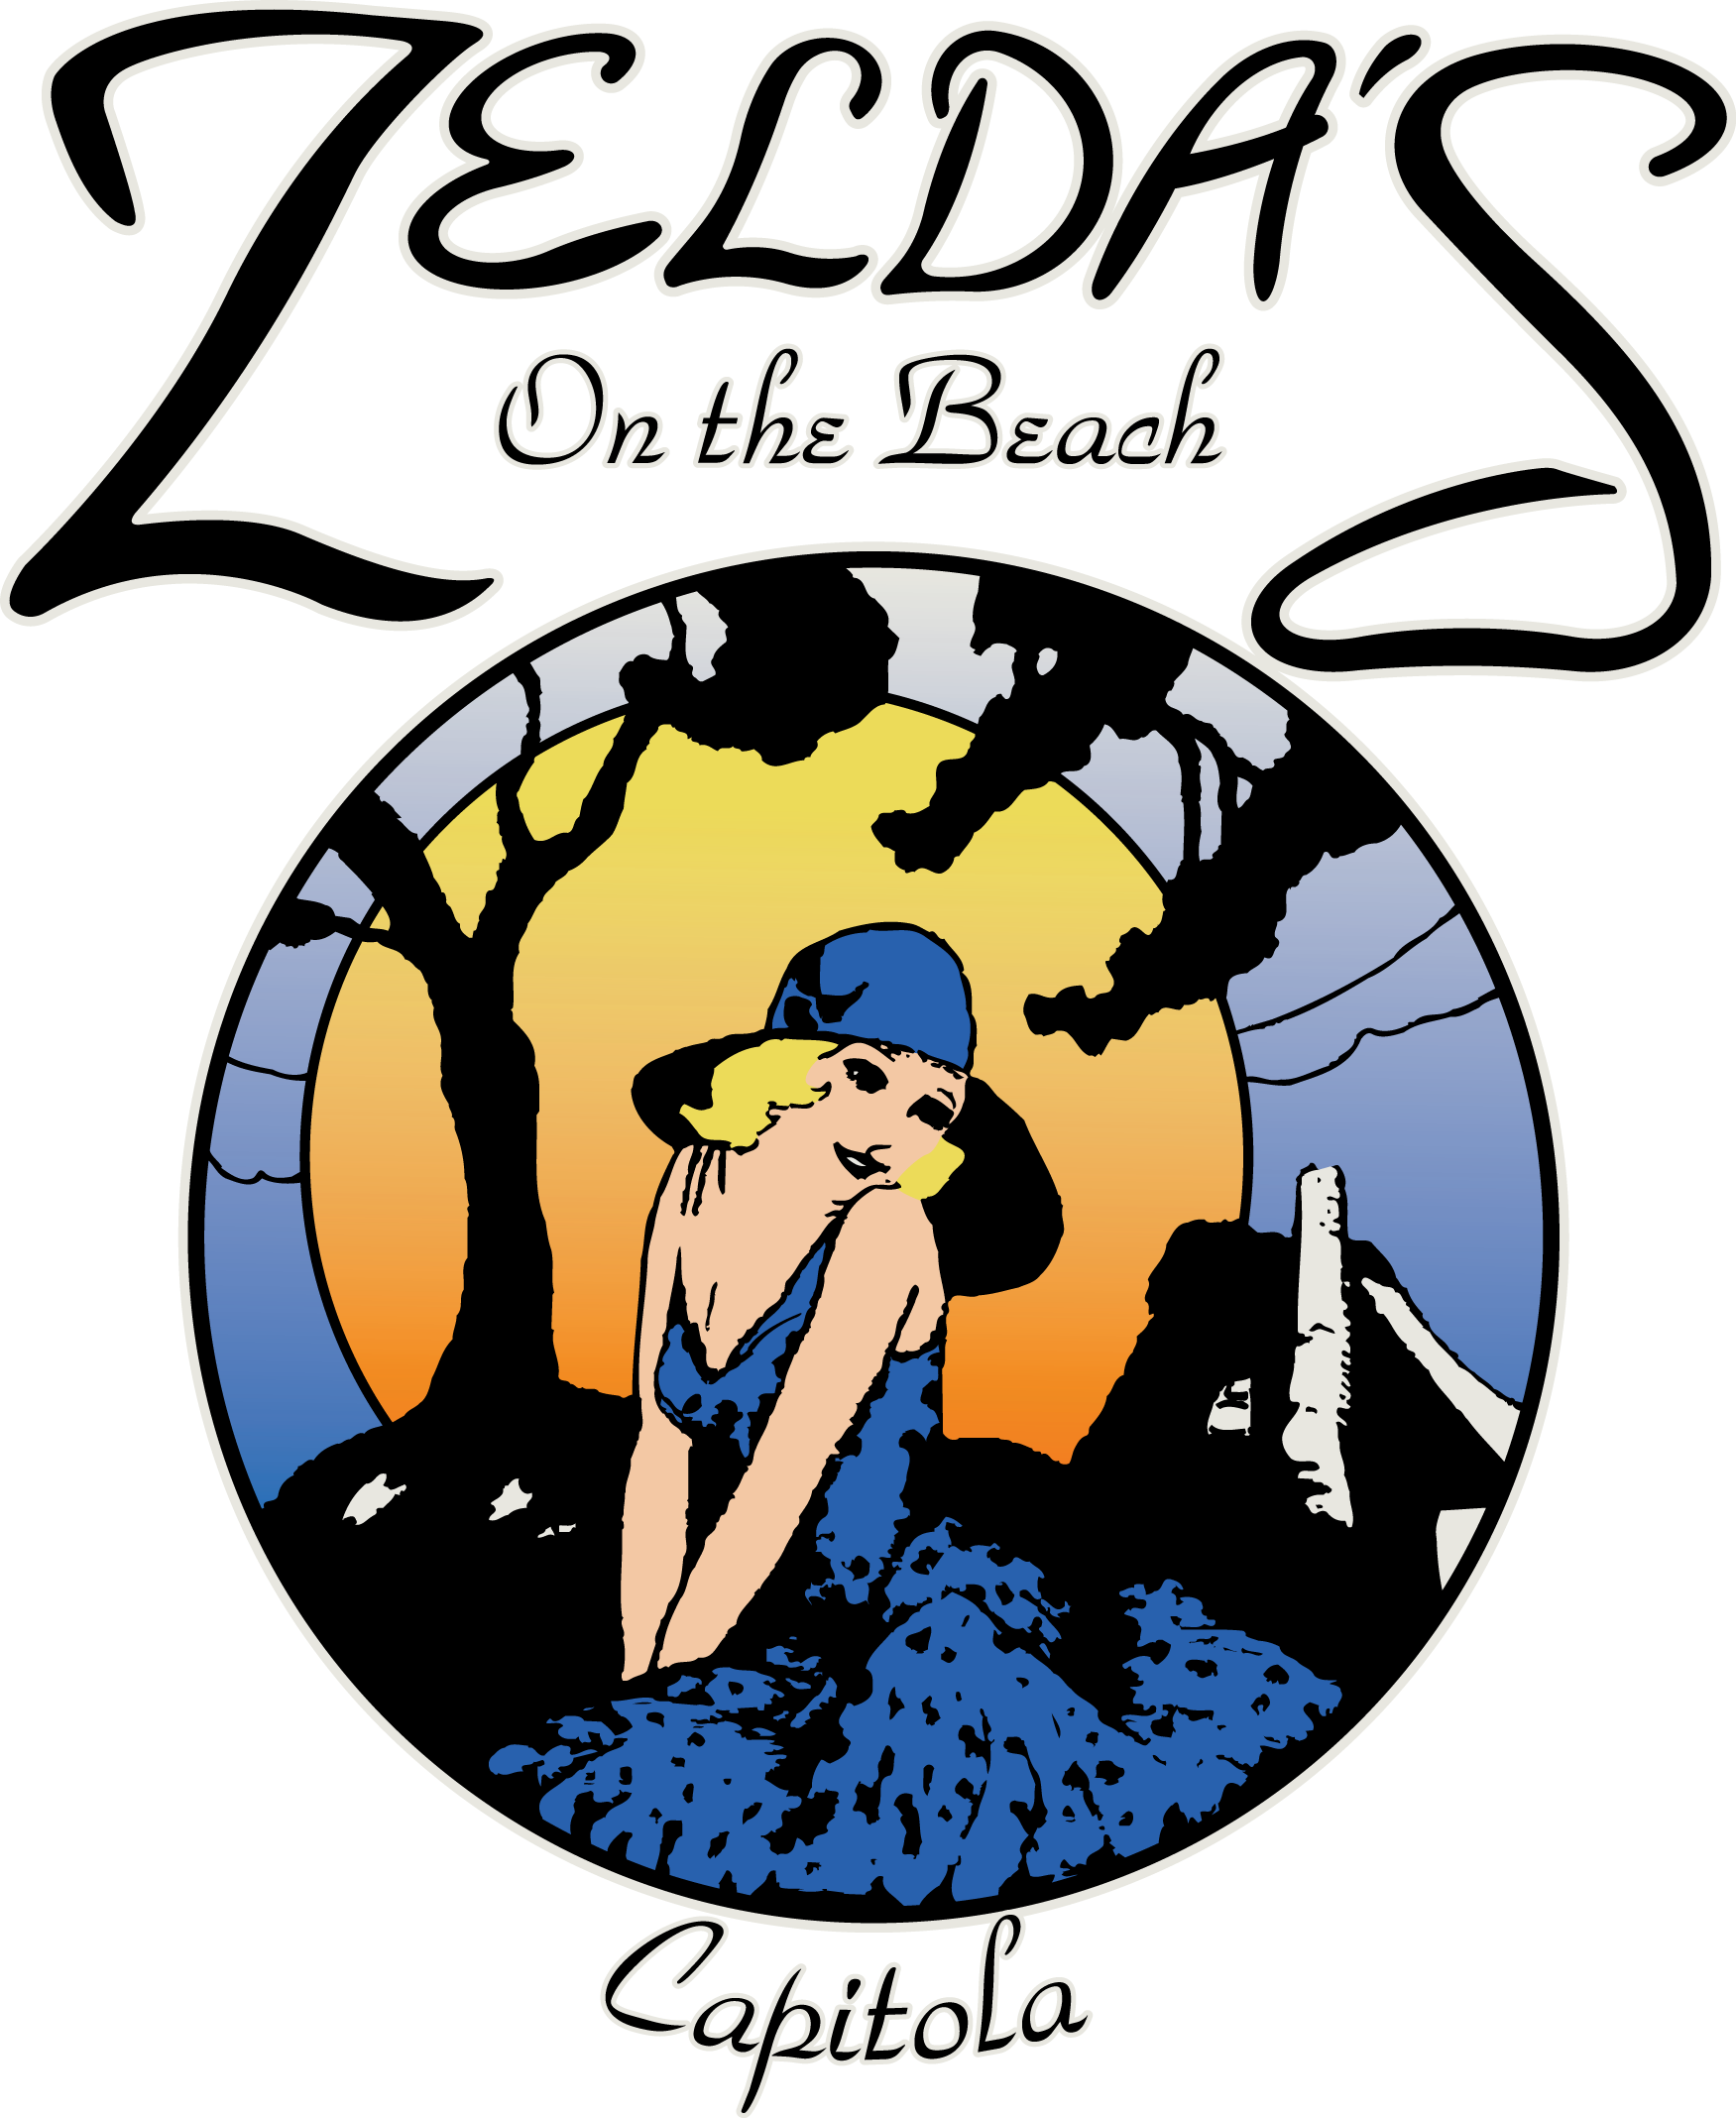 Zelda's on the Beach logo